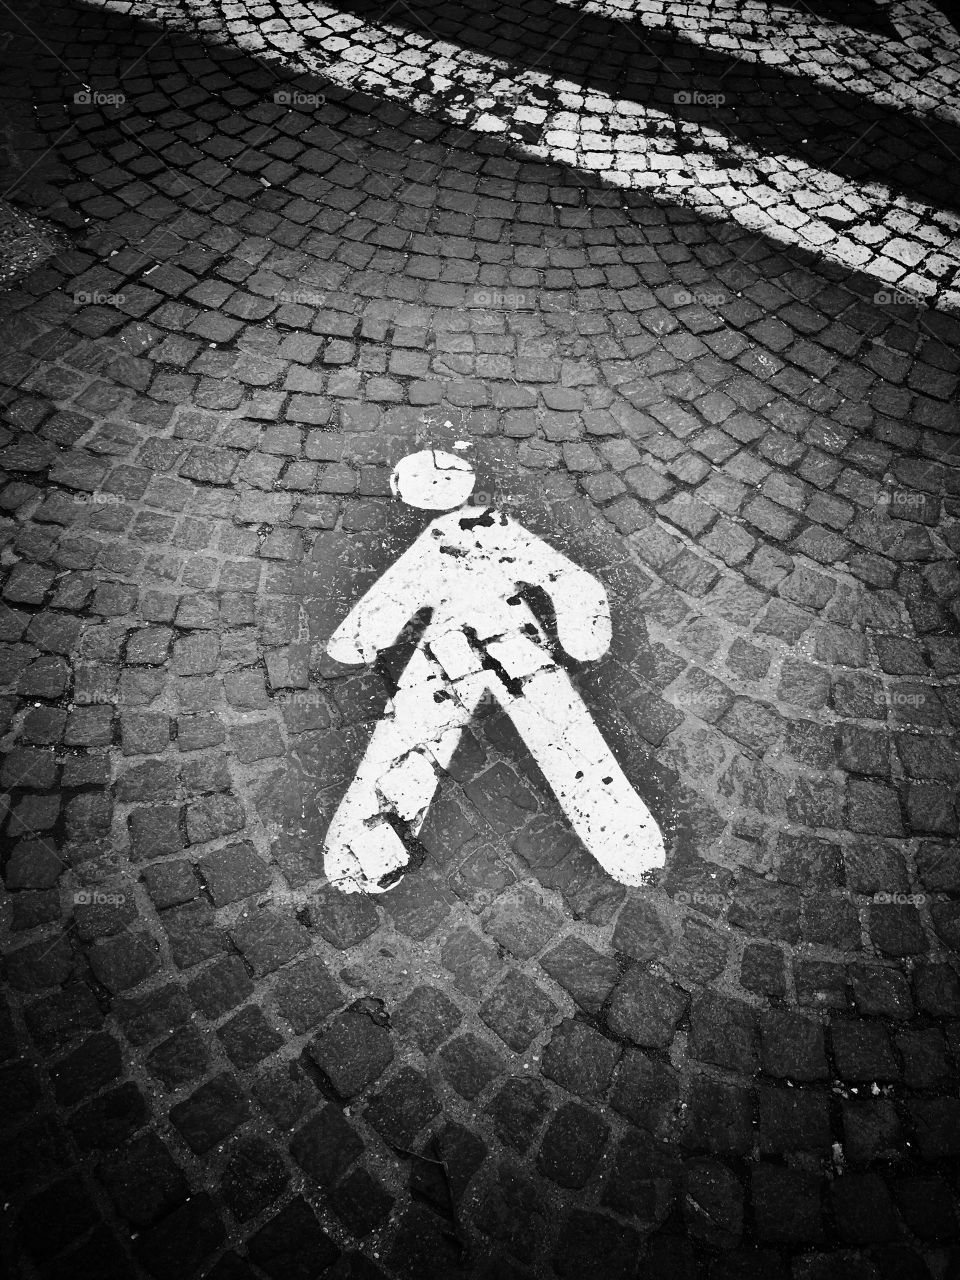 Black and white pedestrian icon on a cobblestone street